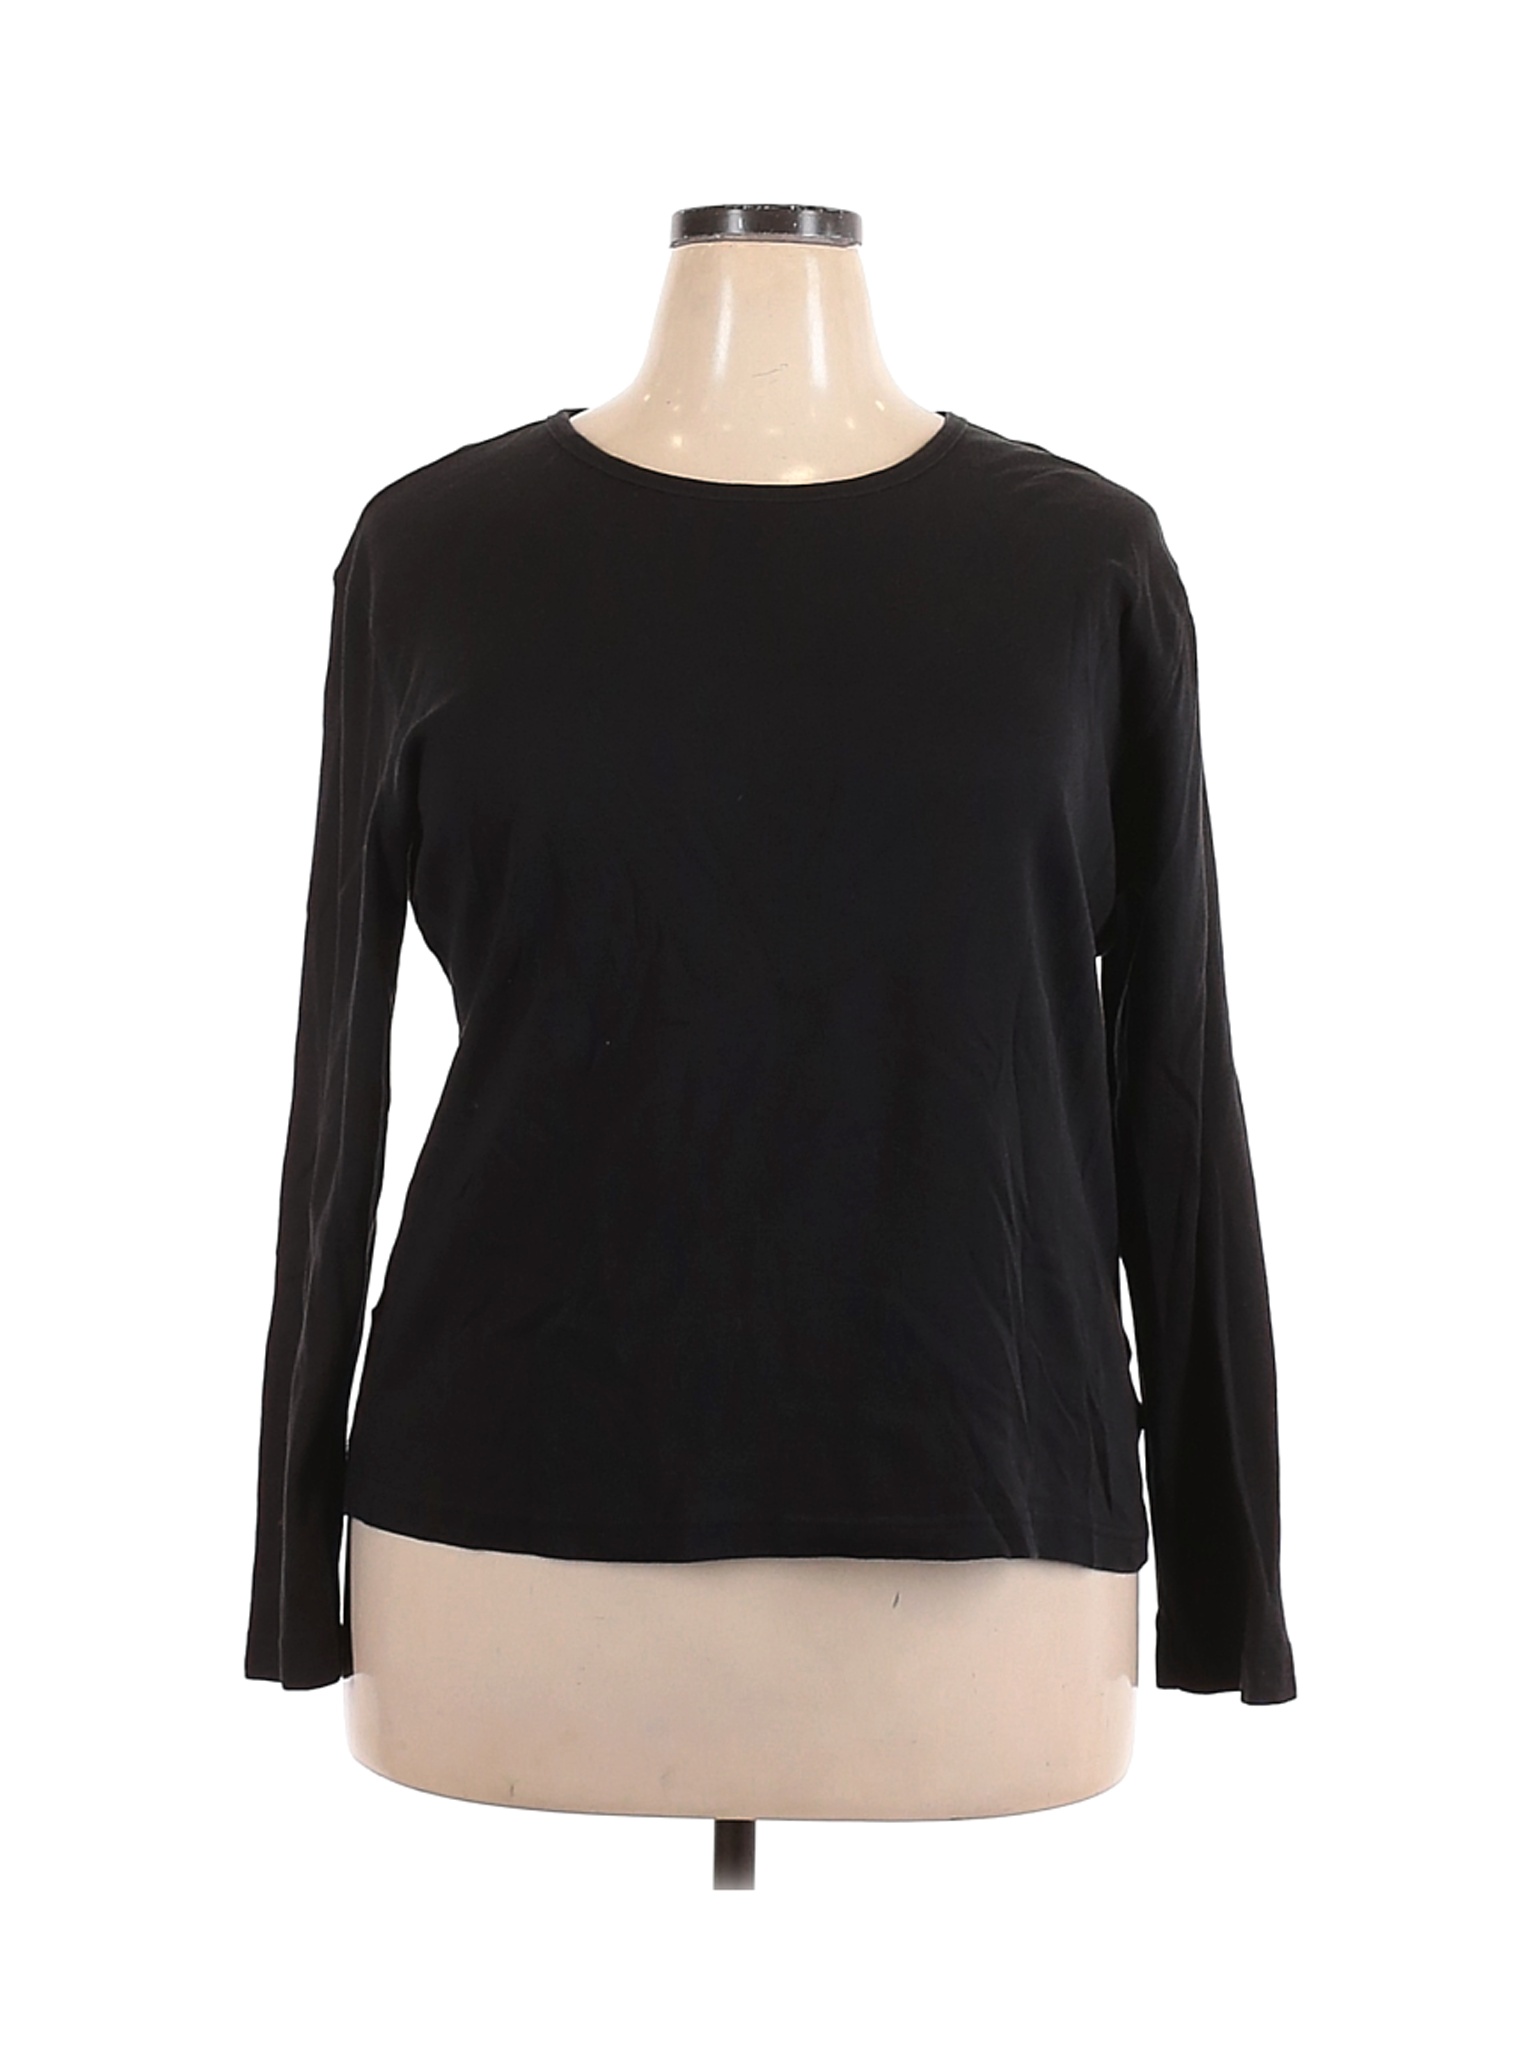 Eddie Bauer Women Black Long Sleeve T-Shirt XXL | eBay